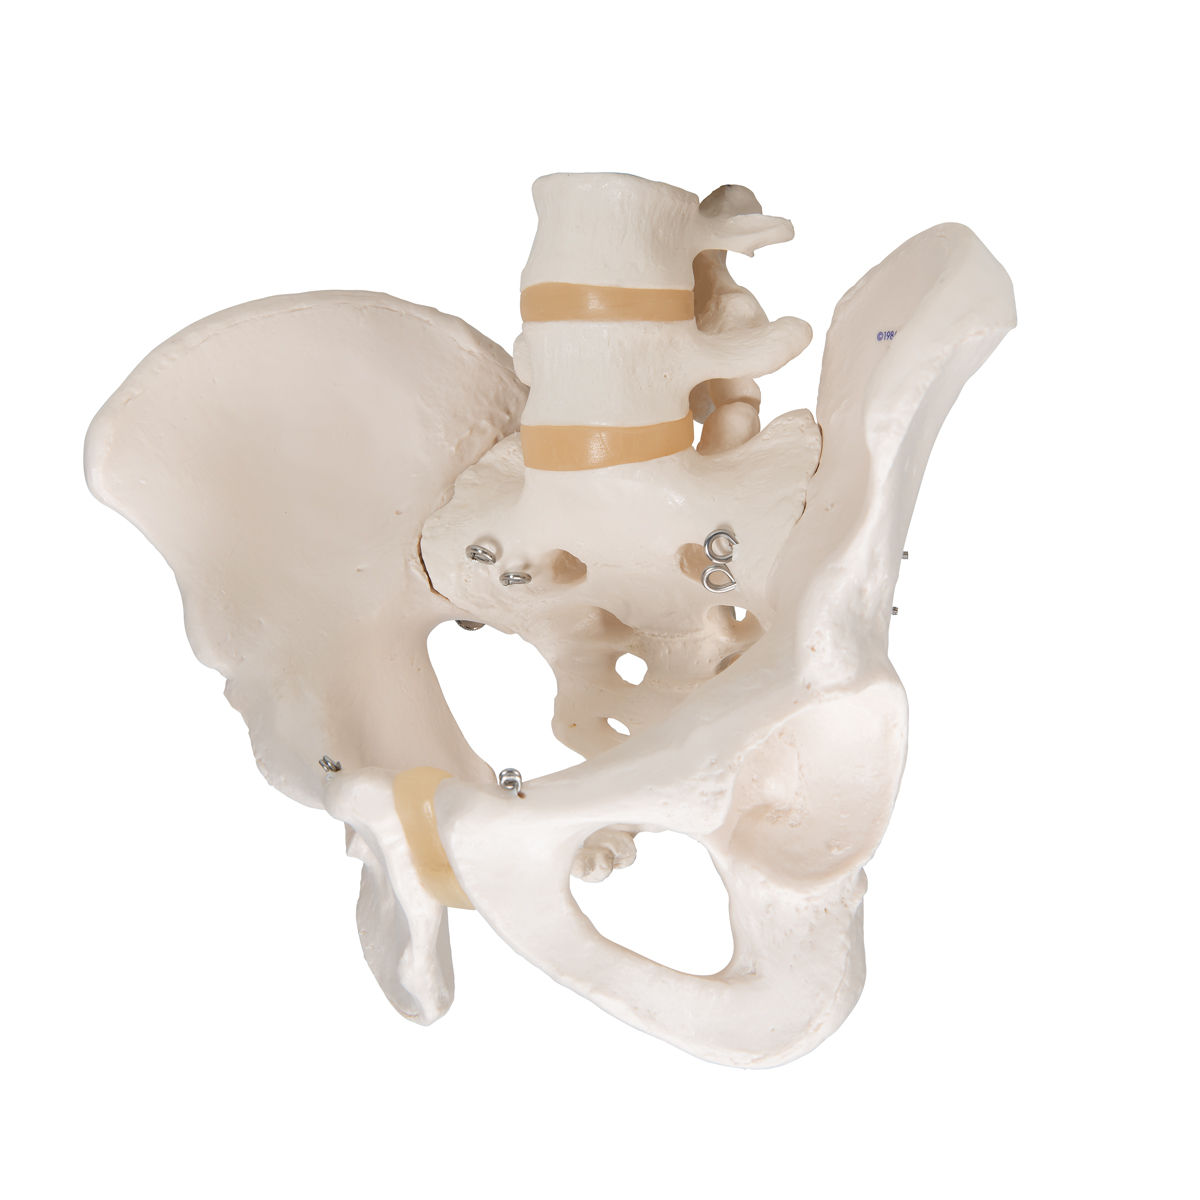 Squelette du bassin masculin, Anatomie